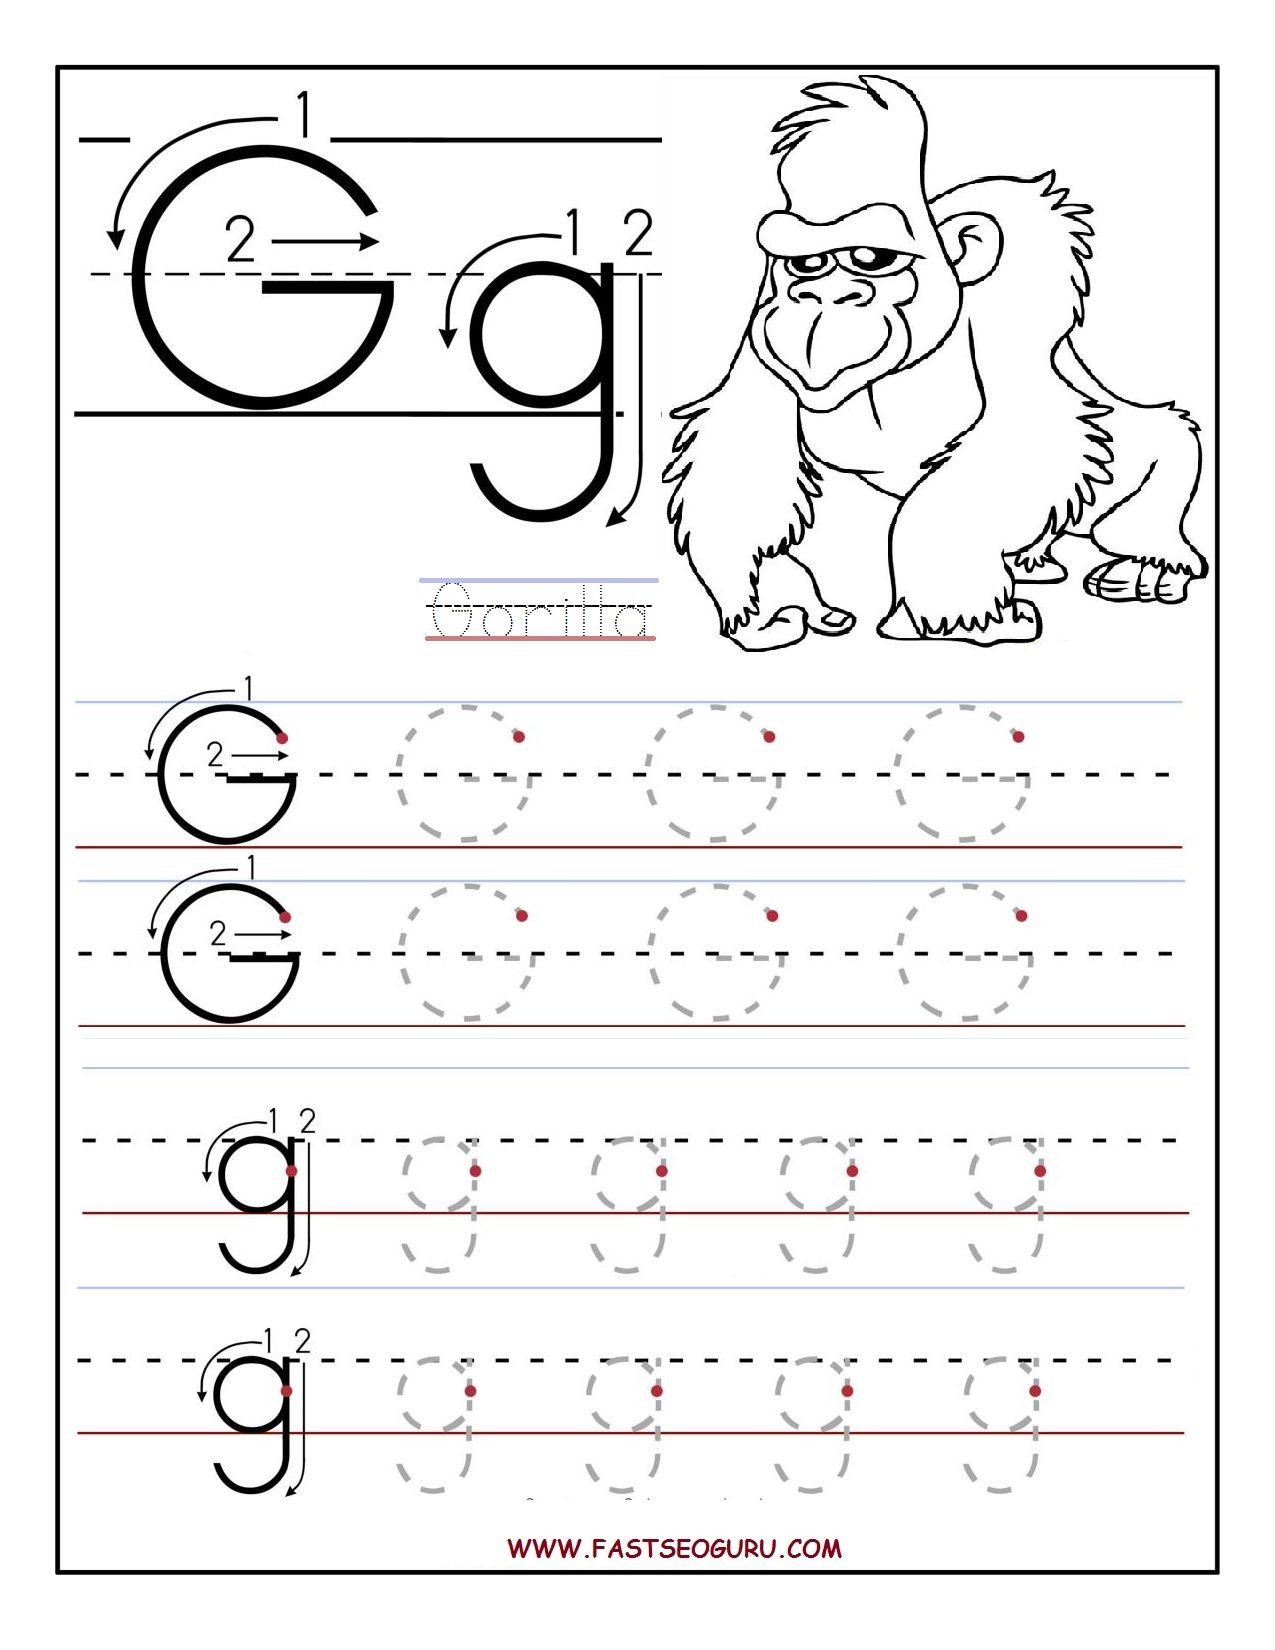 Preschool Letter G Worksheets Worksheets for Preschoolers